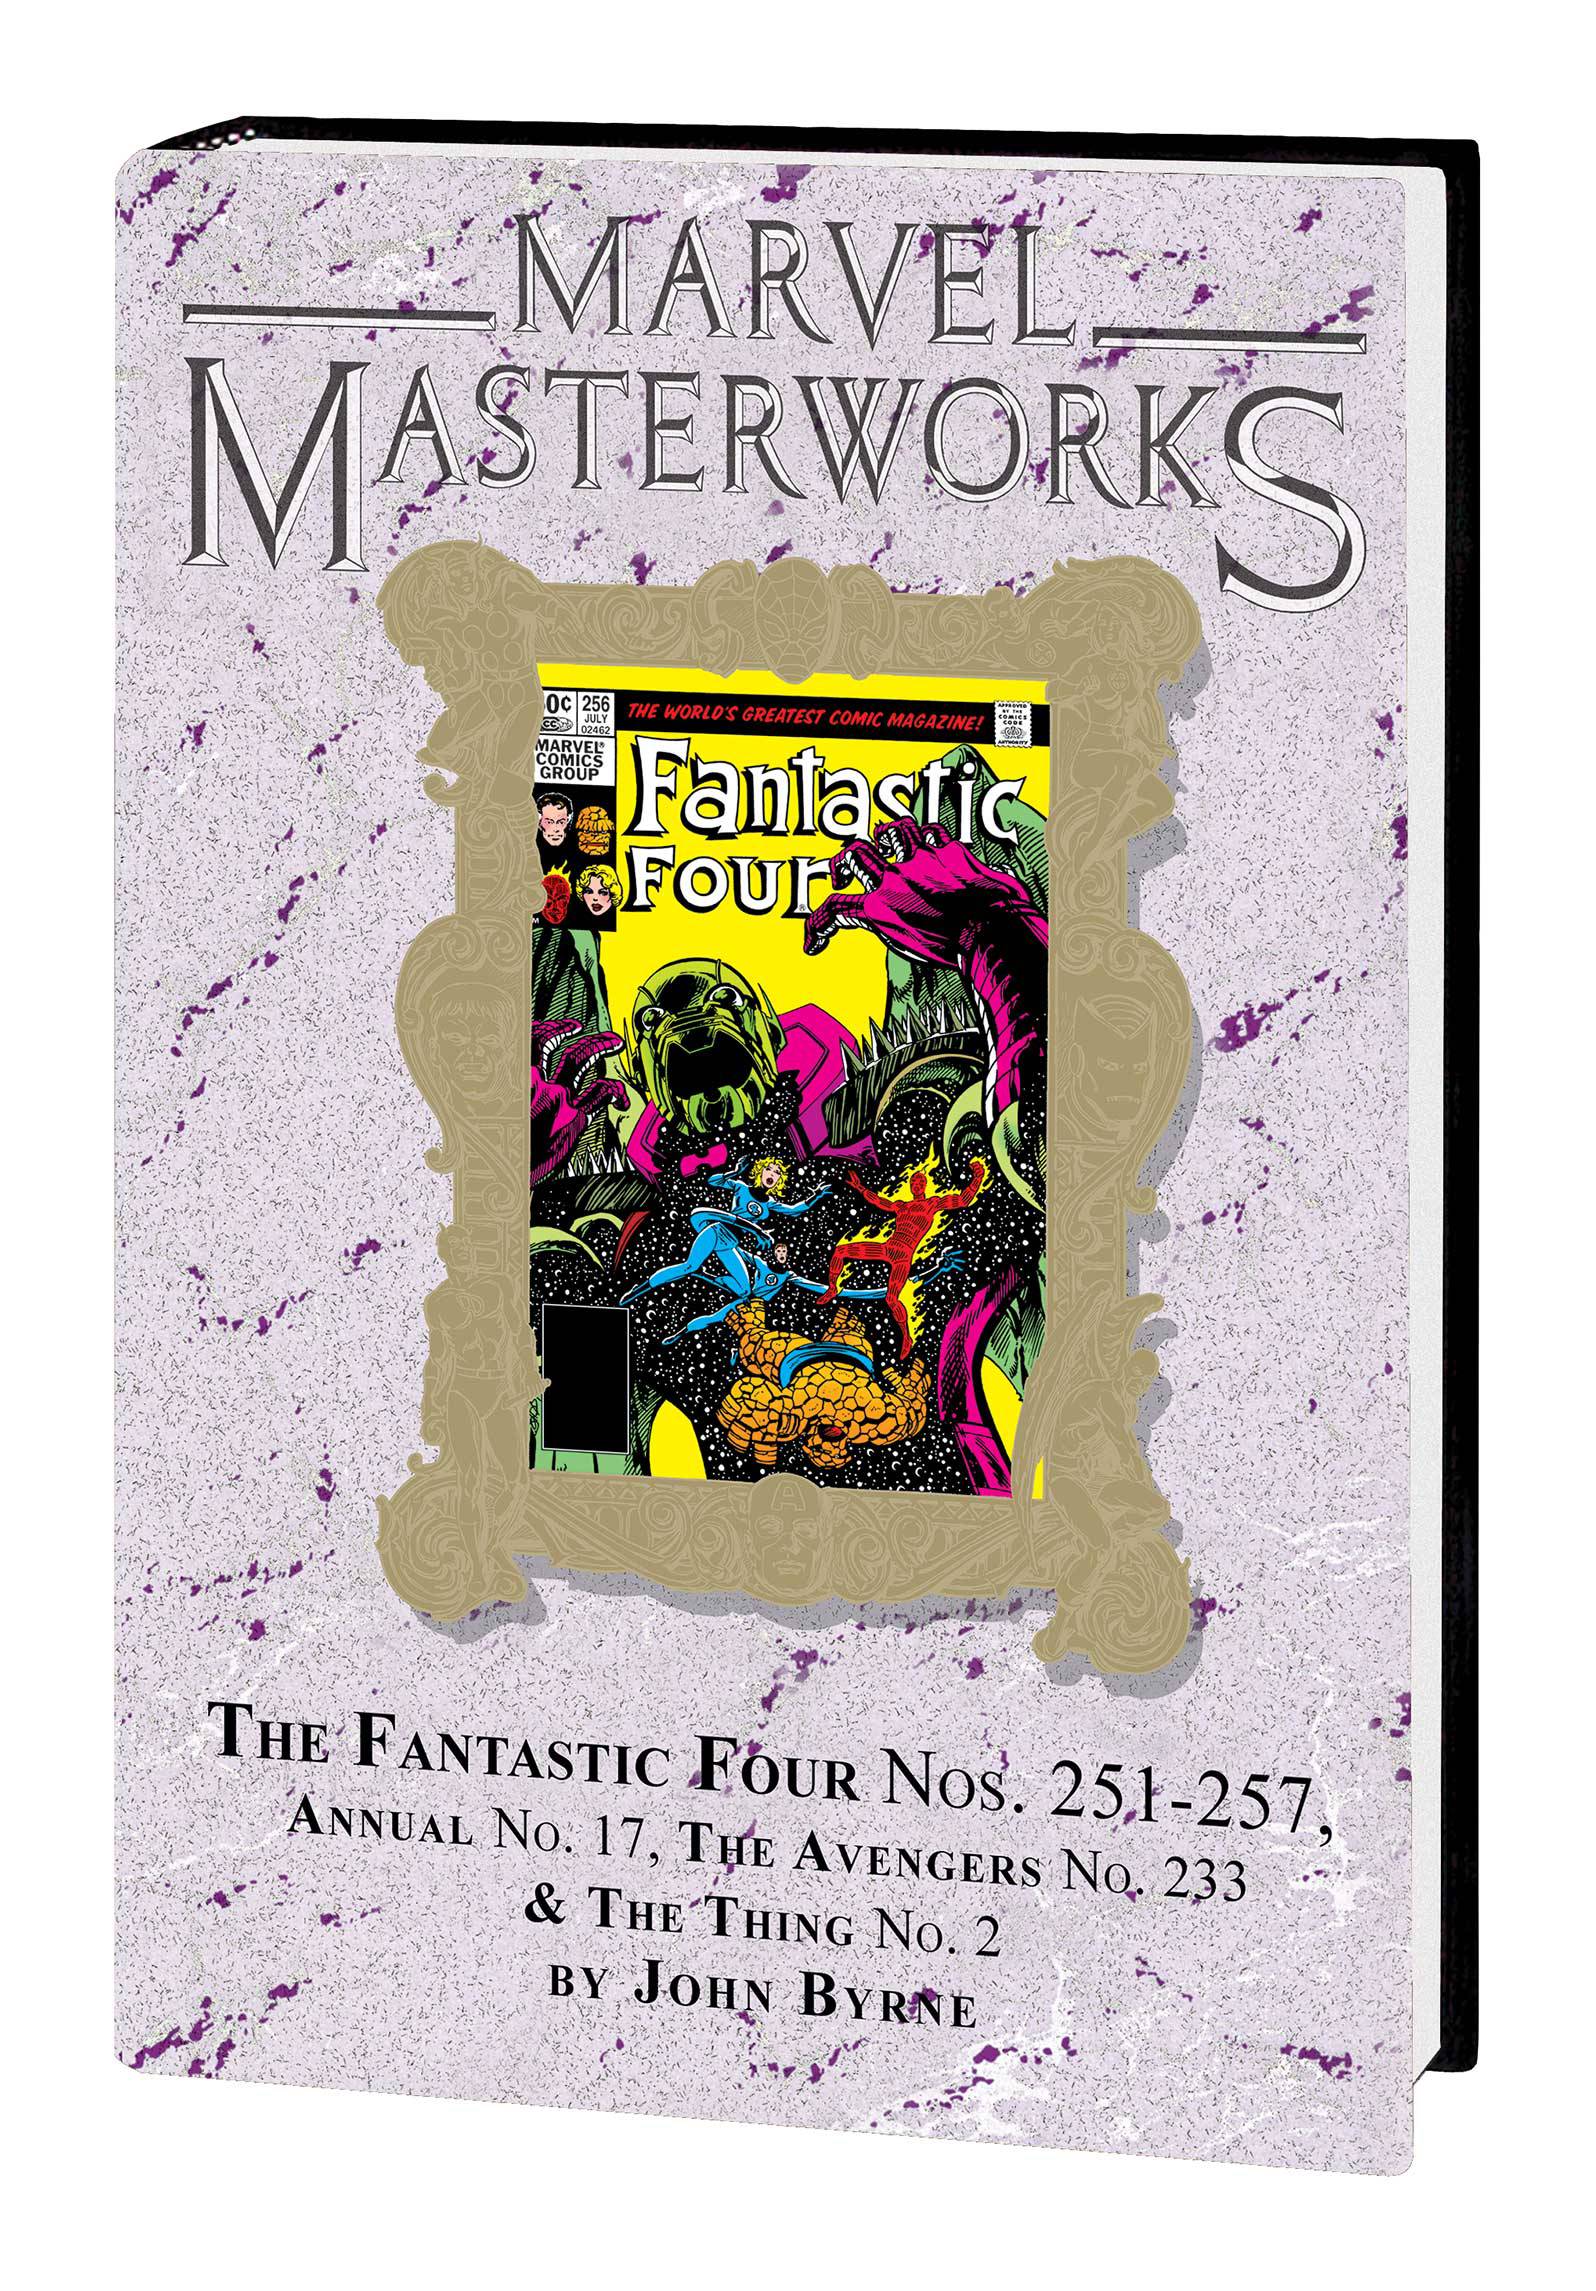 MMW Fantastic Four HC Vol 23 DM Var Ed 317 - State of Comics